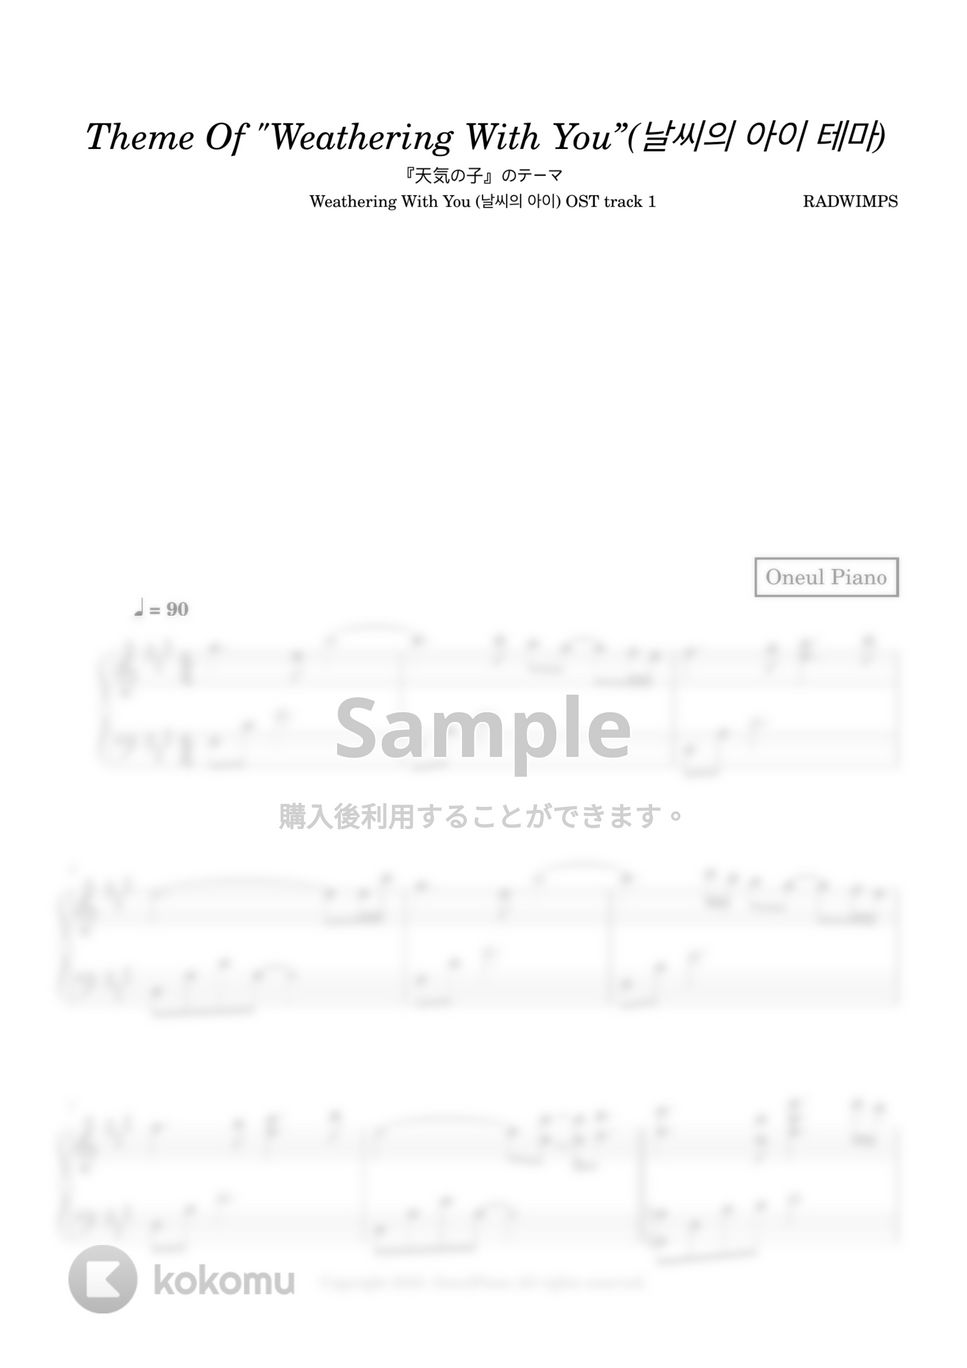 RADWIMPS - 『天気の子』のテーマ (Theme Of "Weathering With You”) (天気の子 OST track 1) by 今日ピアノ(Oneul Piano)